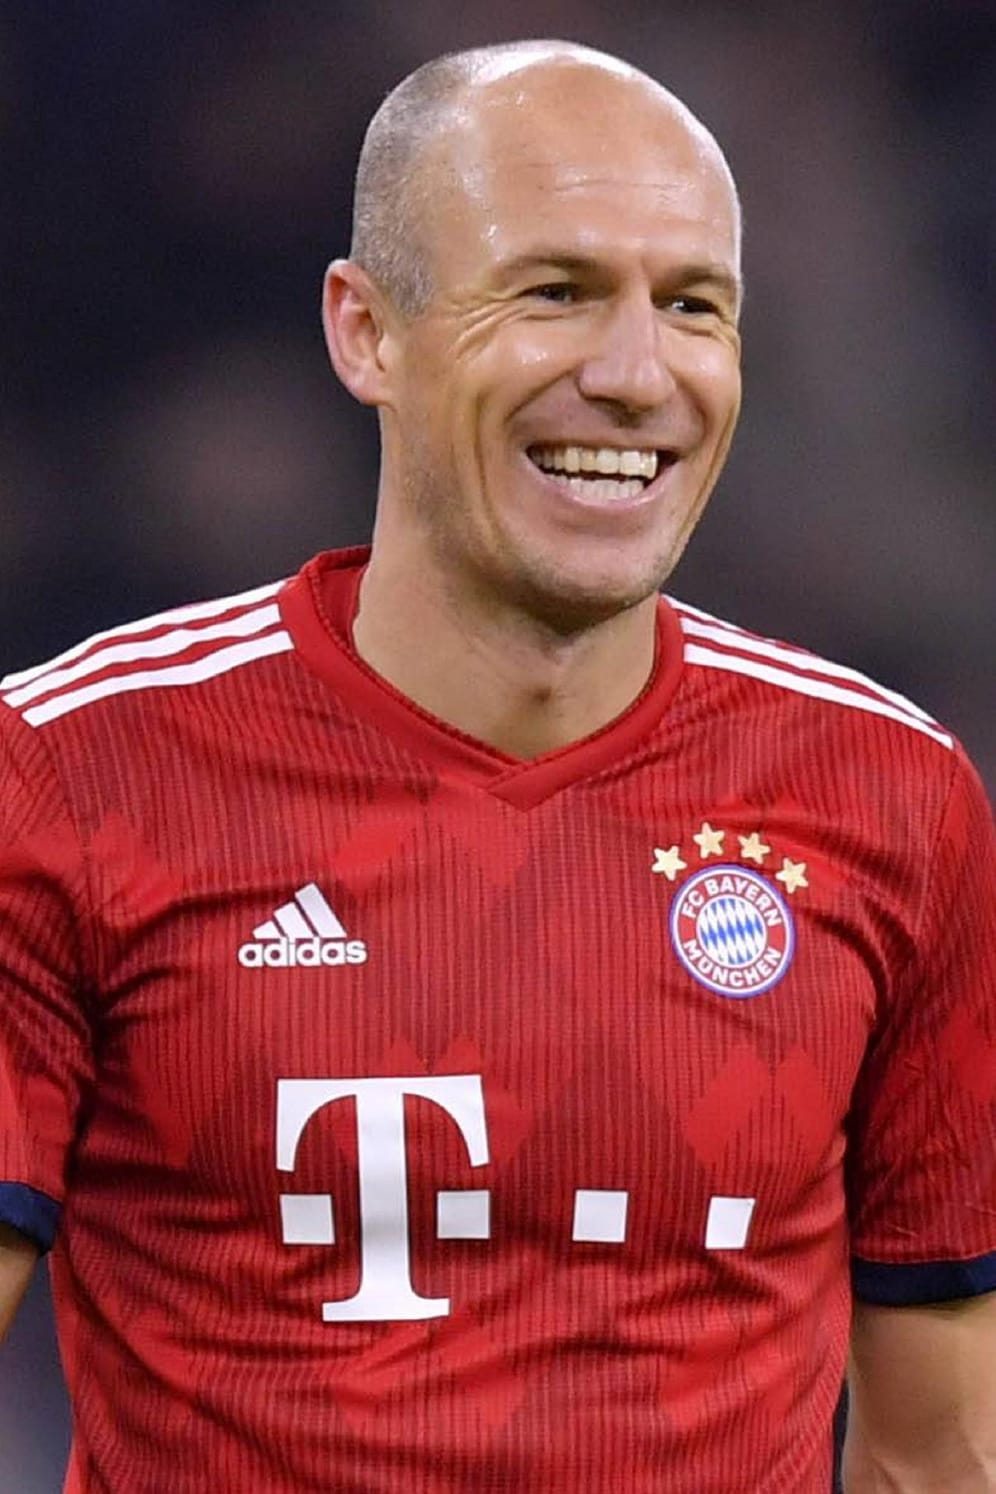 FC Bayern Star Arjen Robben